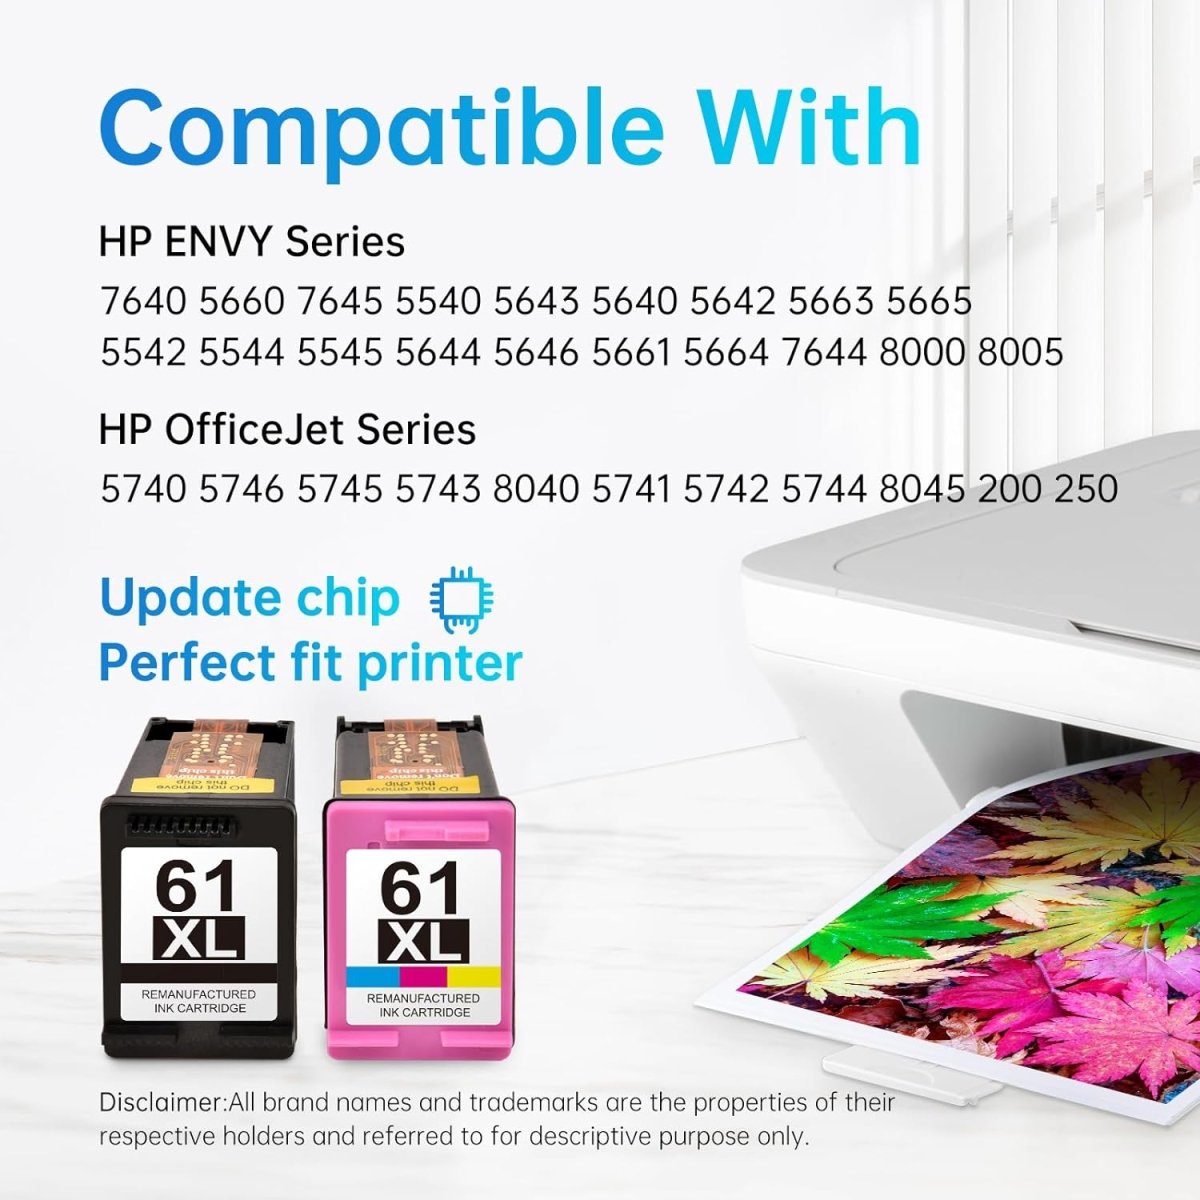 Remanufactured HP 61XL Color Ink Cartridge, 1-PK - Linford Office:Printer Ink & Toner Cartridge